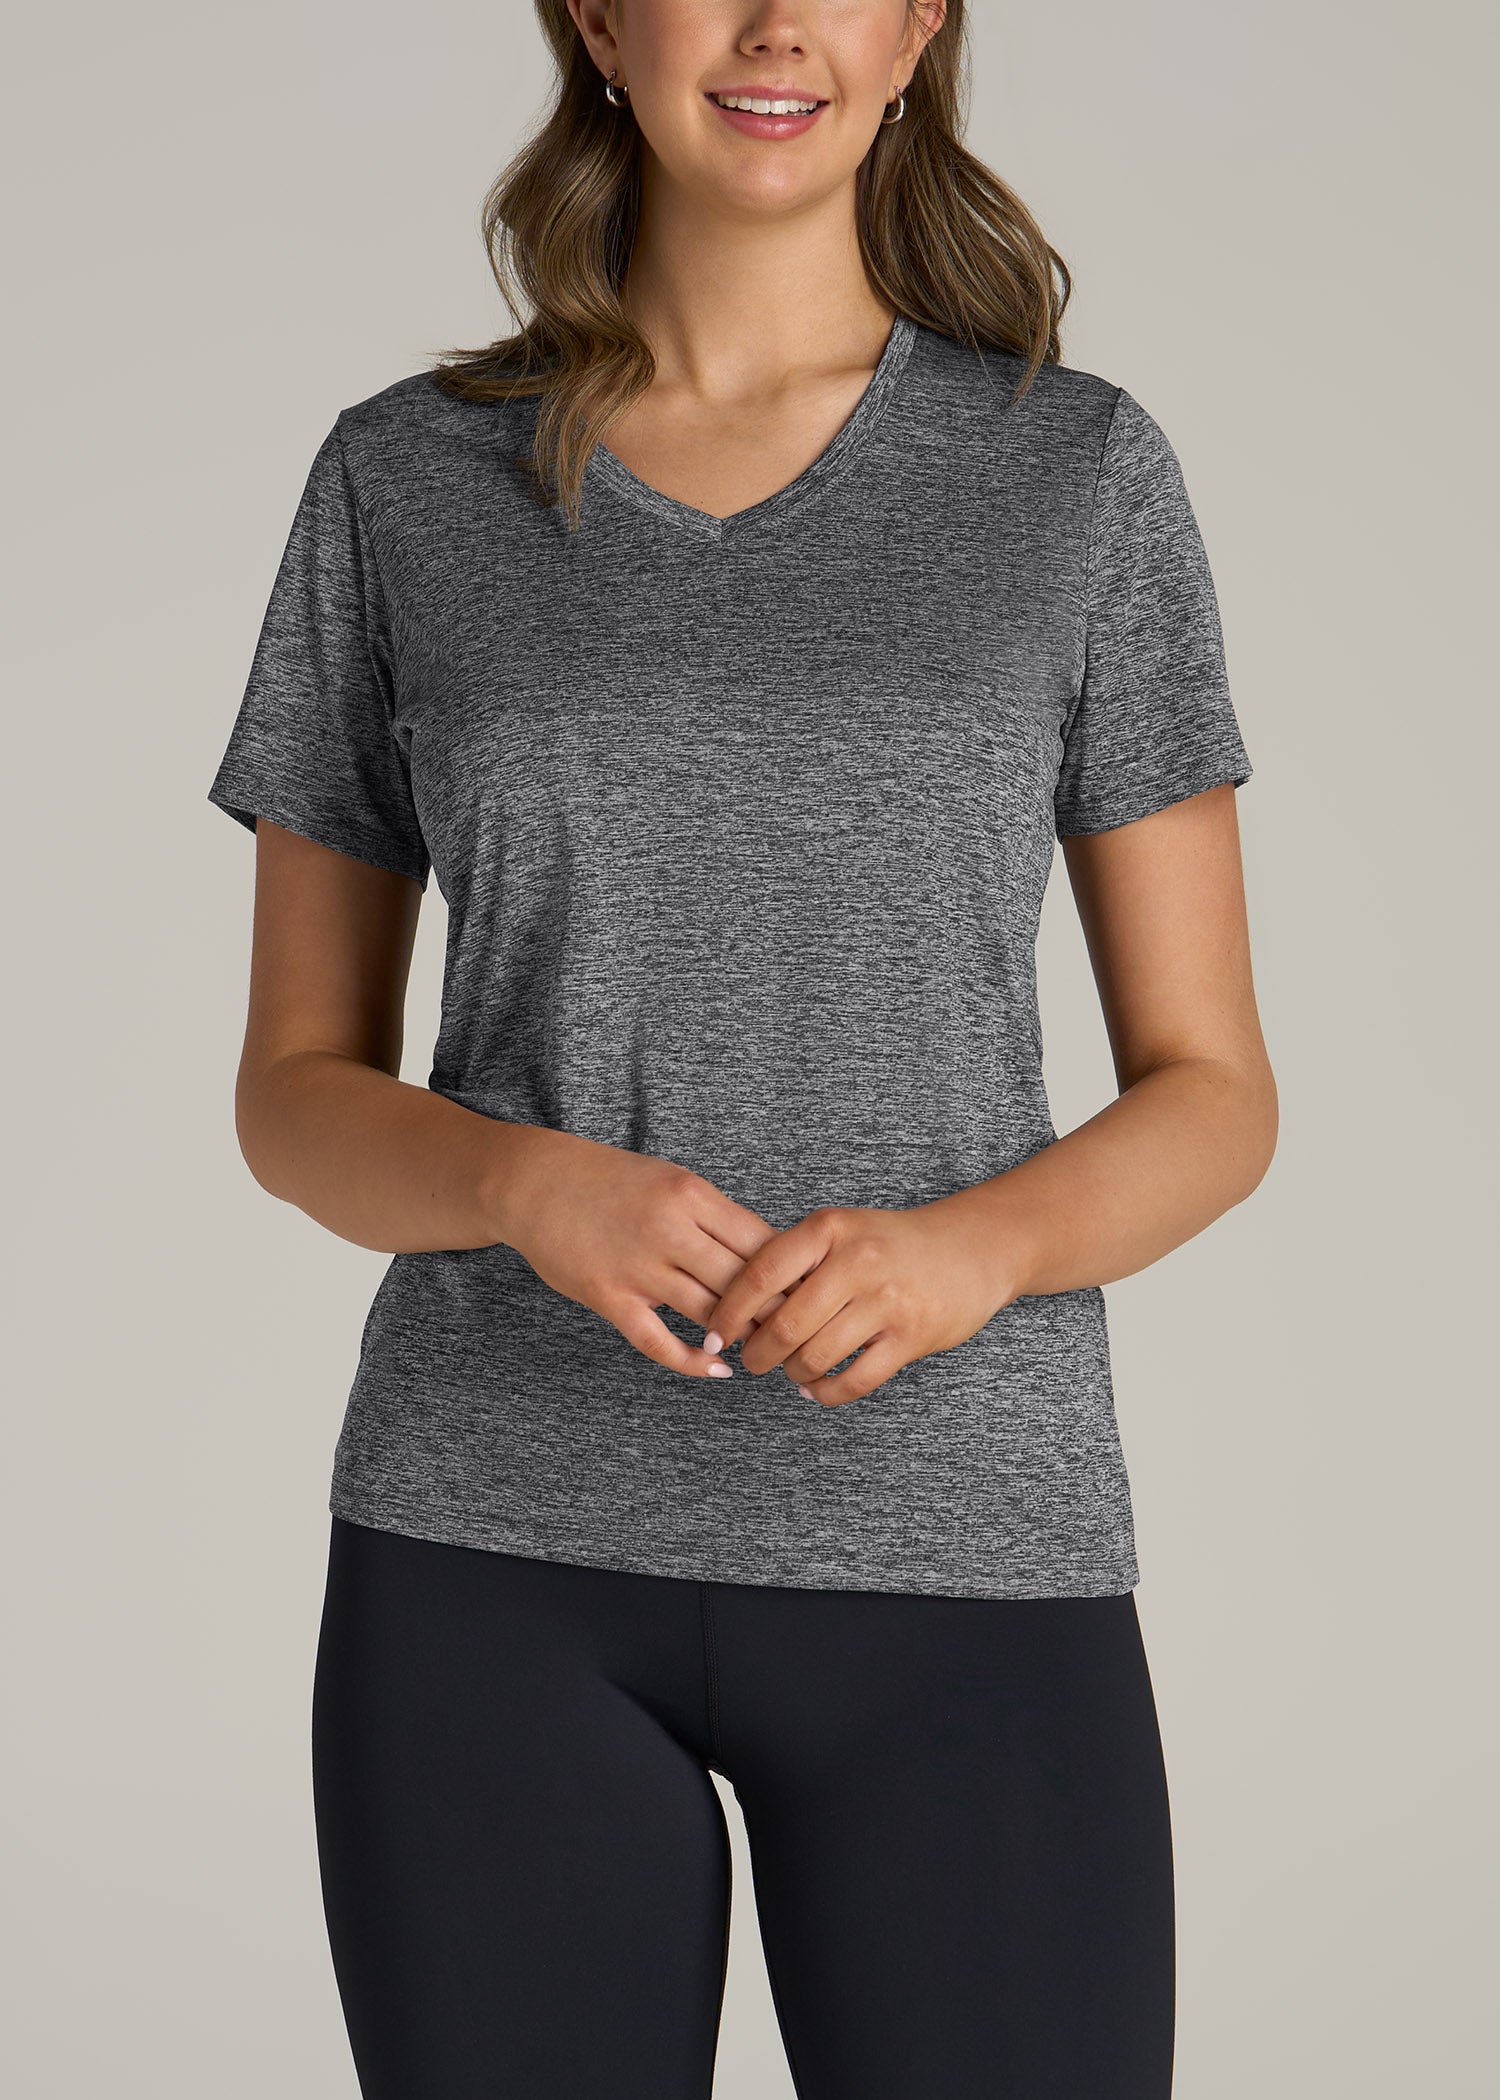 Short Sleeve Active V-Neck T-Shirt for Tall Women